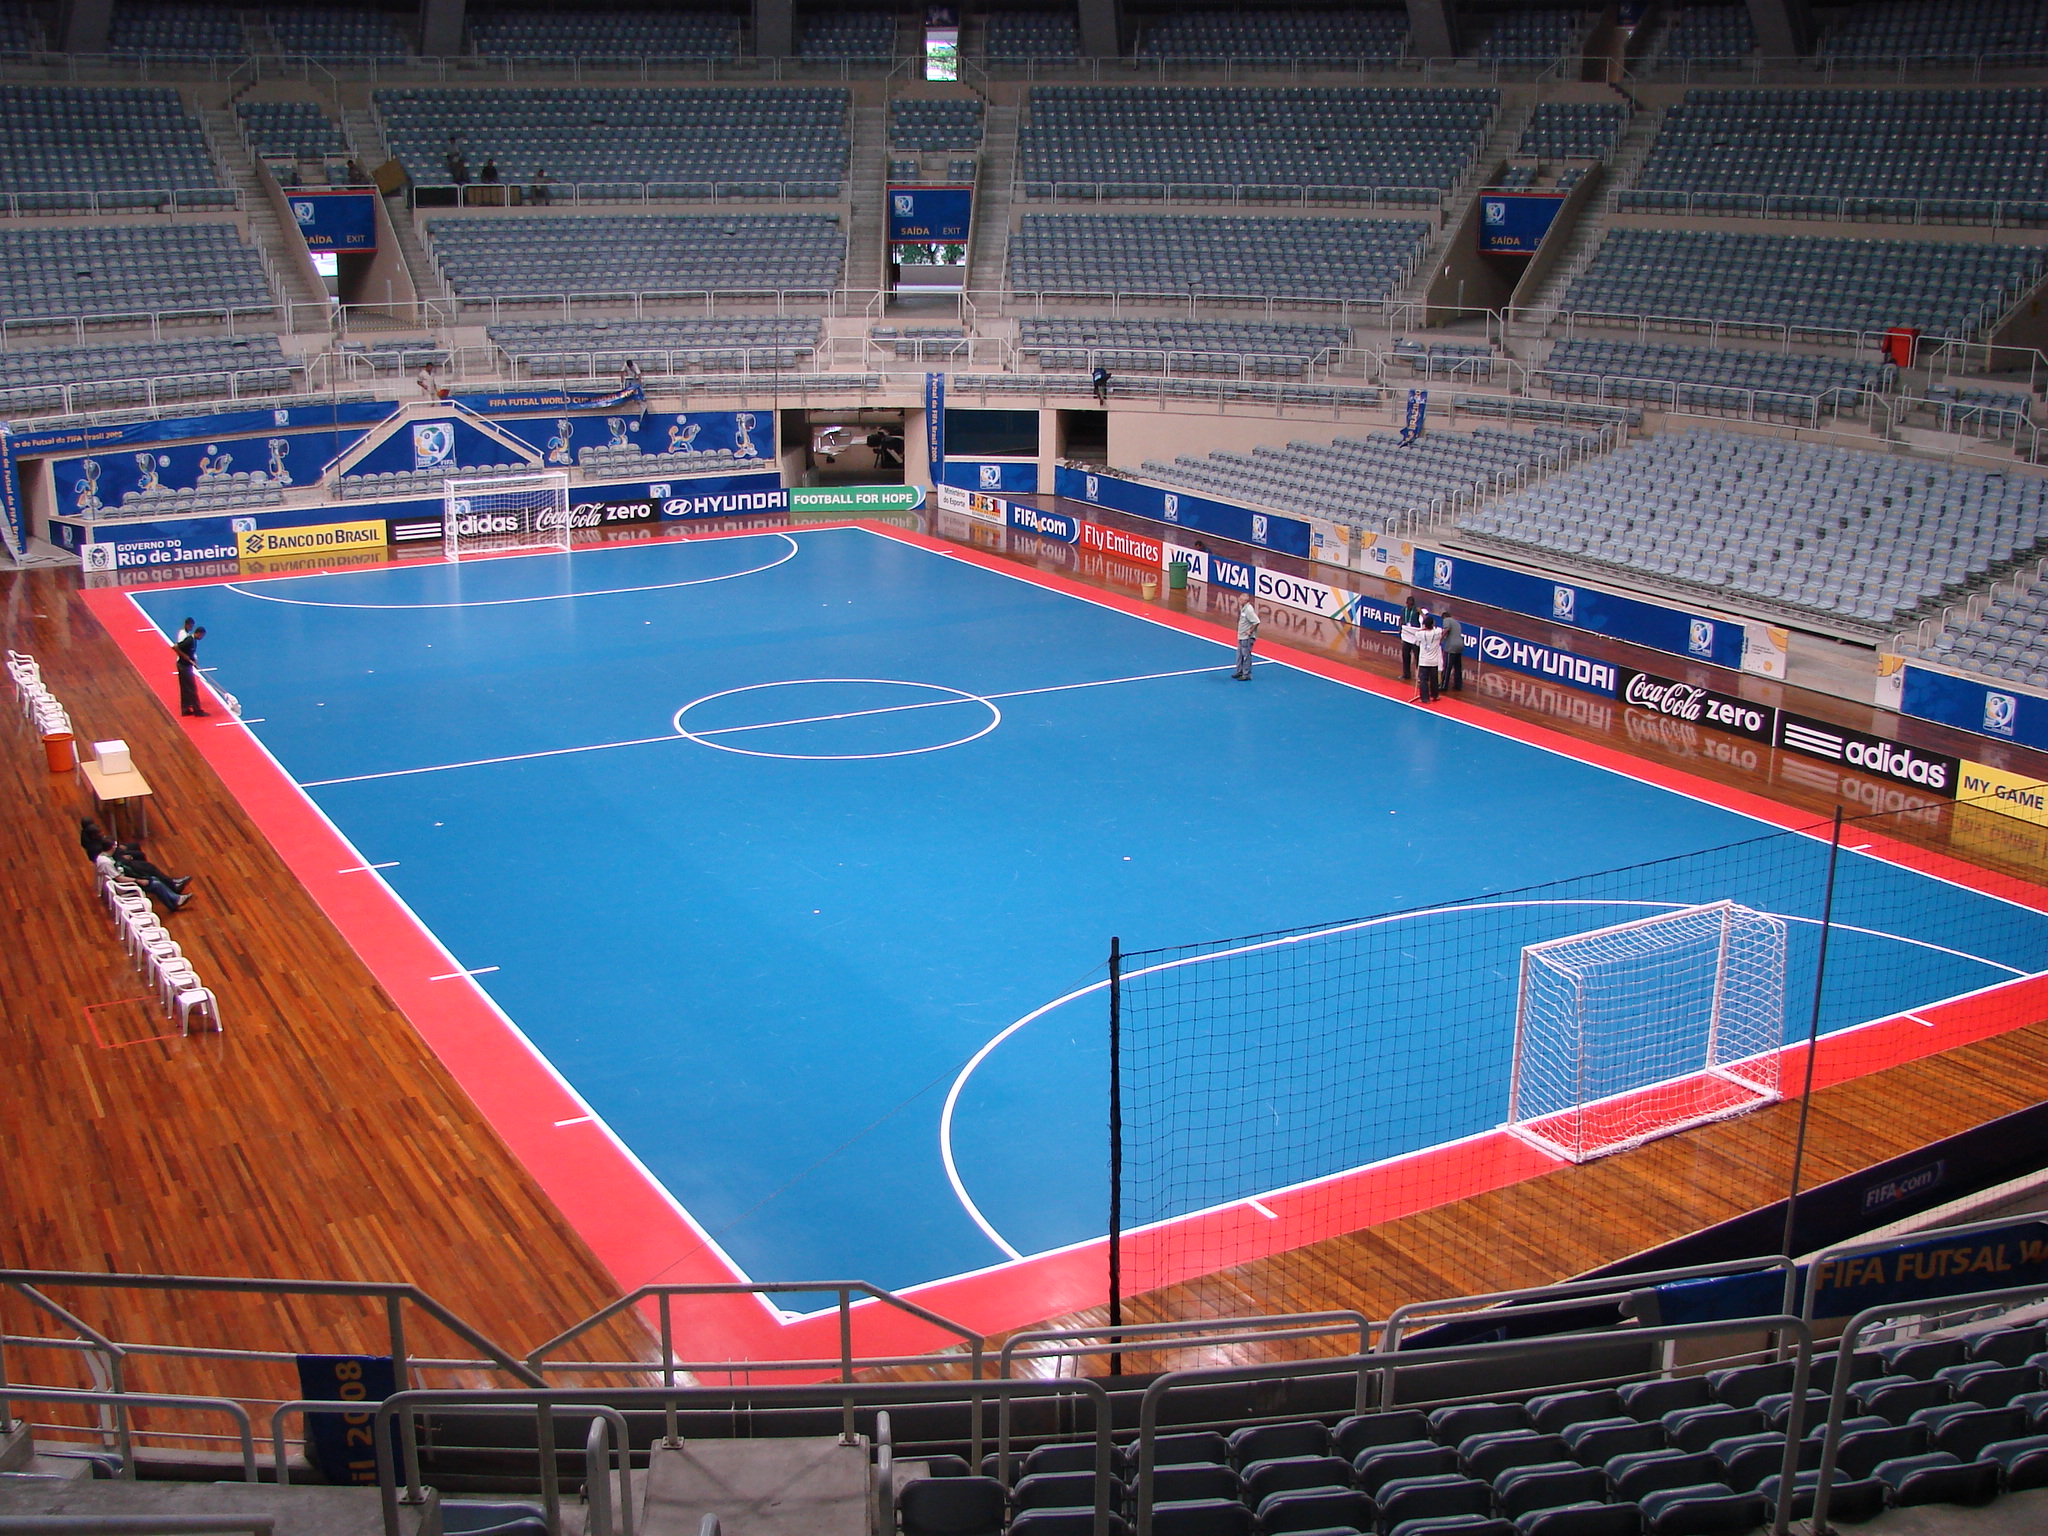 http://azreferee.persiangig.com/Futsal%20Referee%206/quadra-de-futsal.jpg